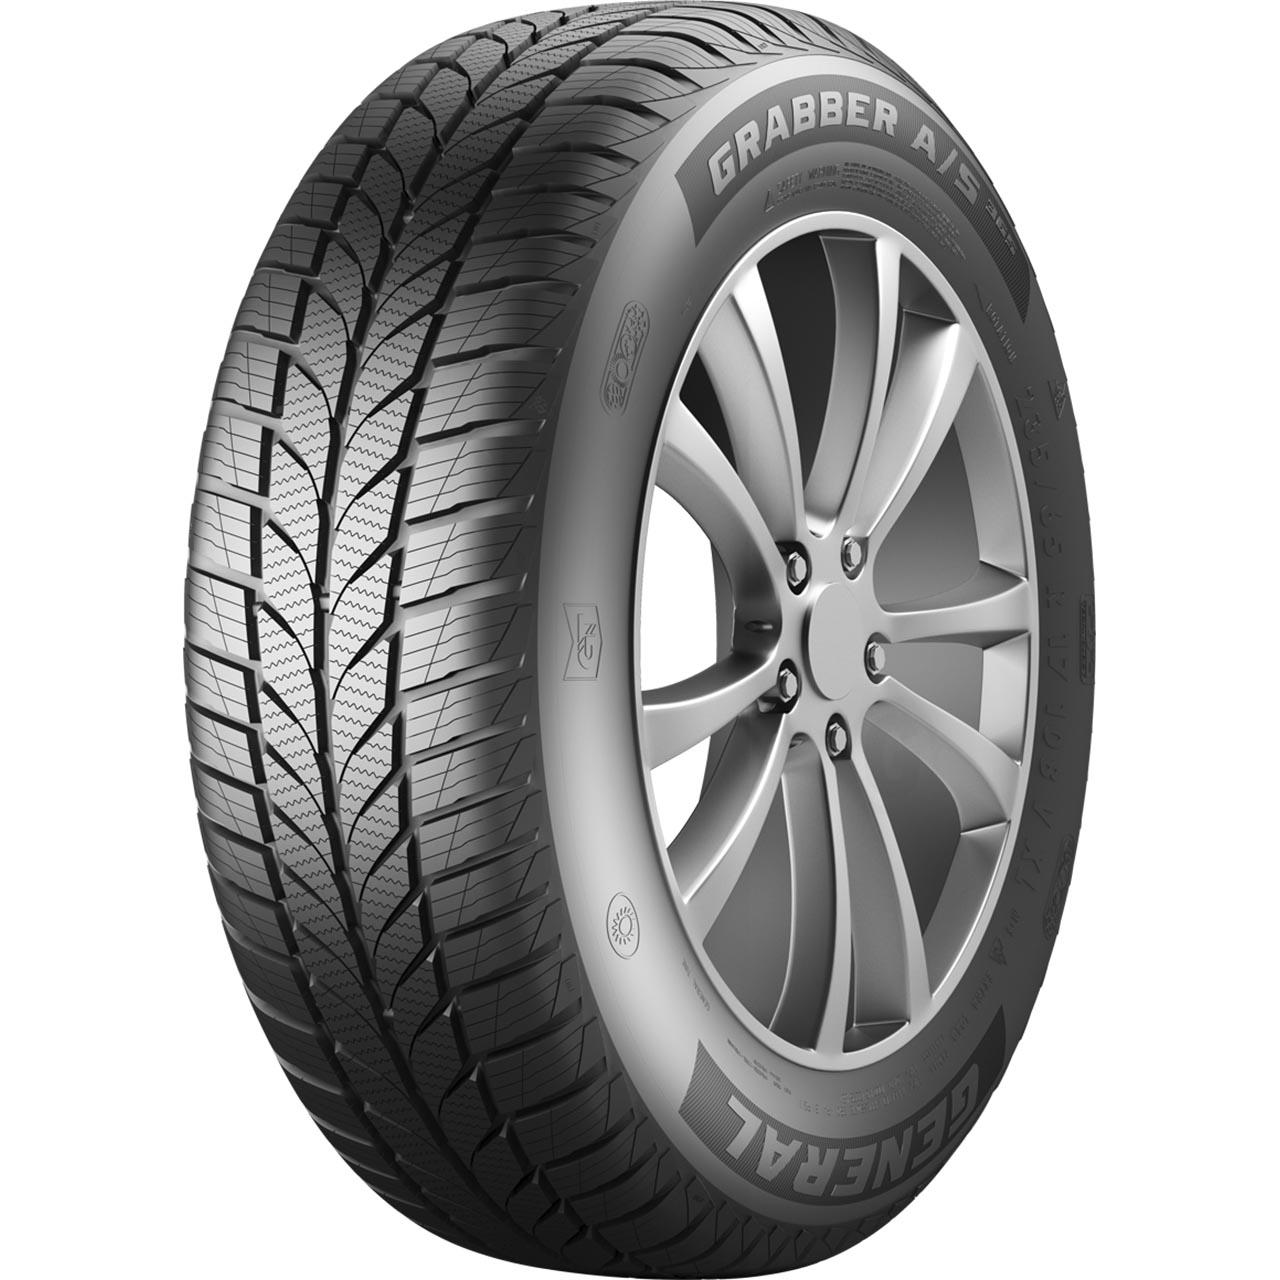 General Tire Grabber AS 365 215/55R18 99V XL